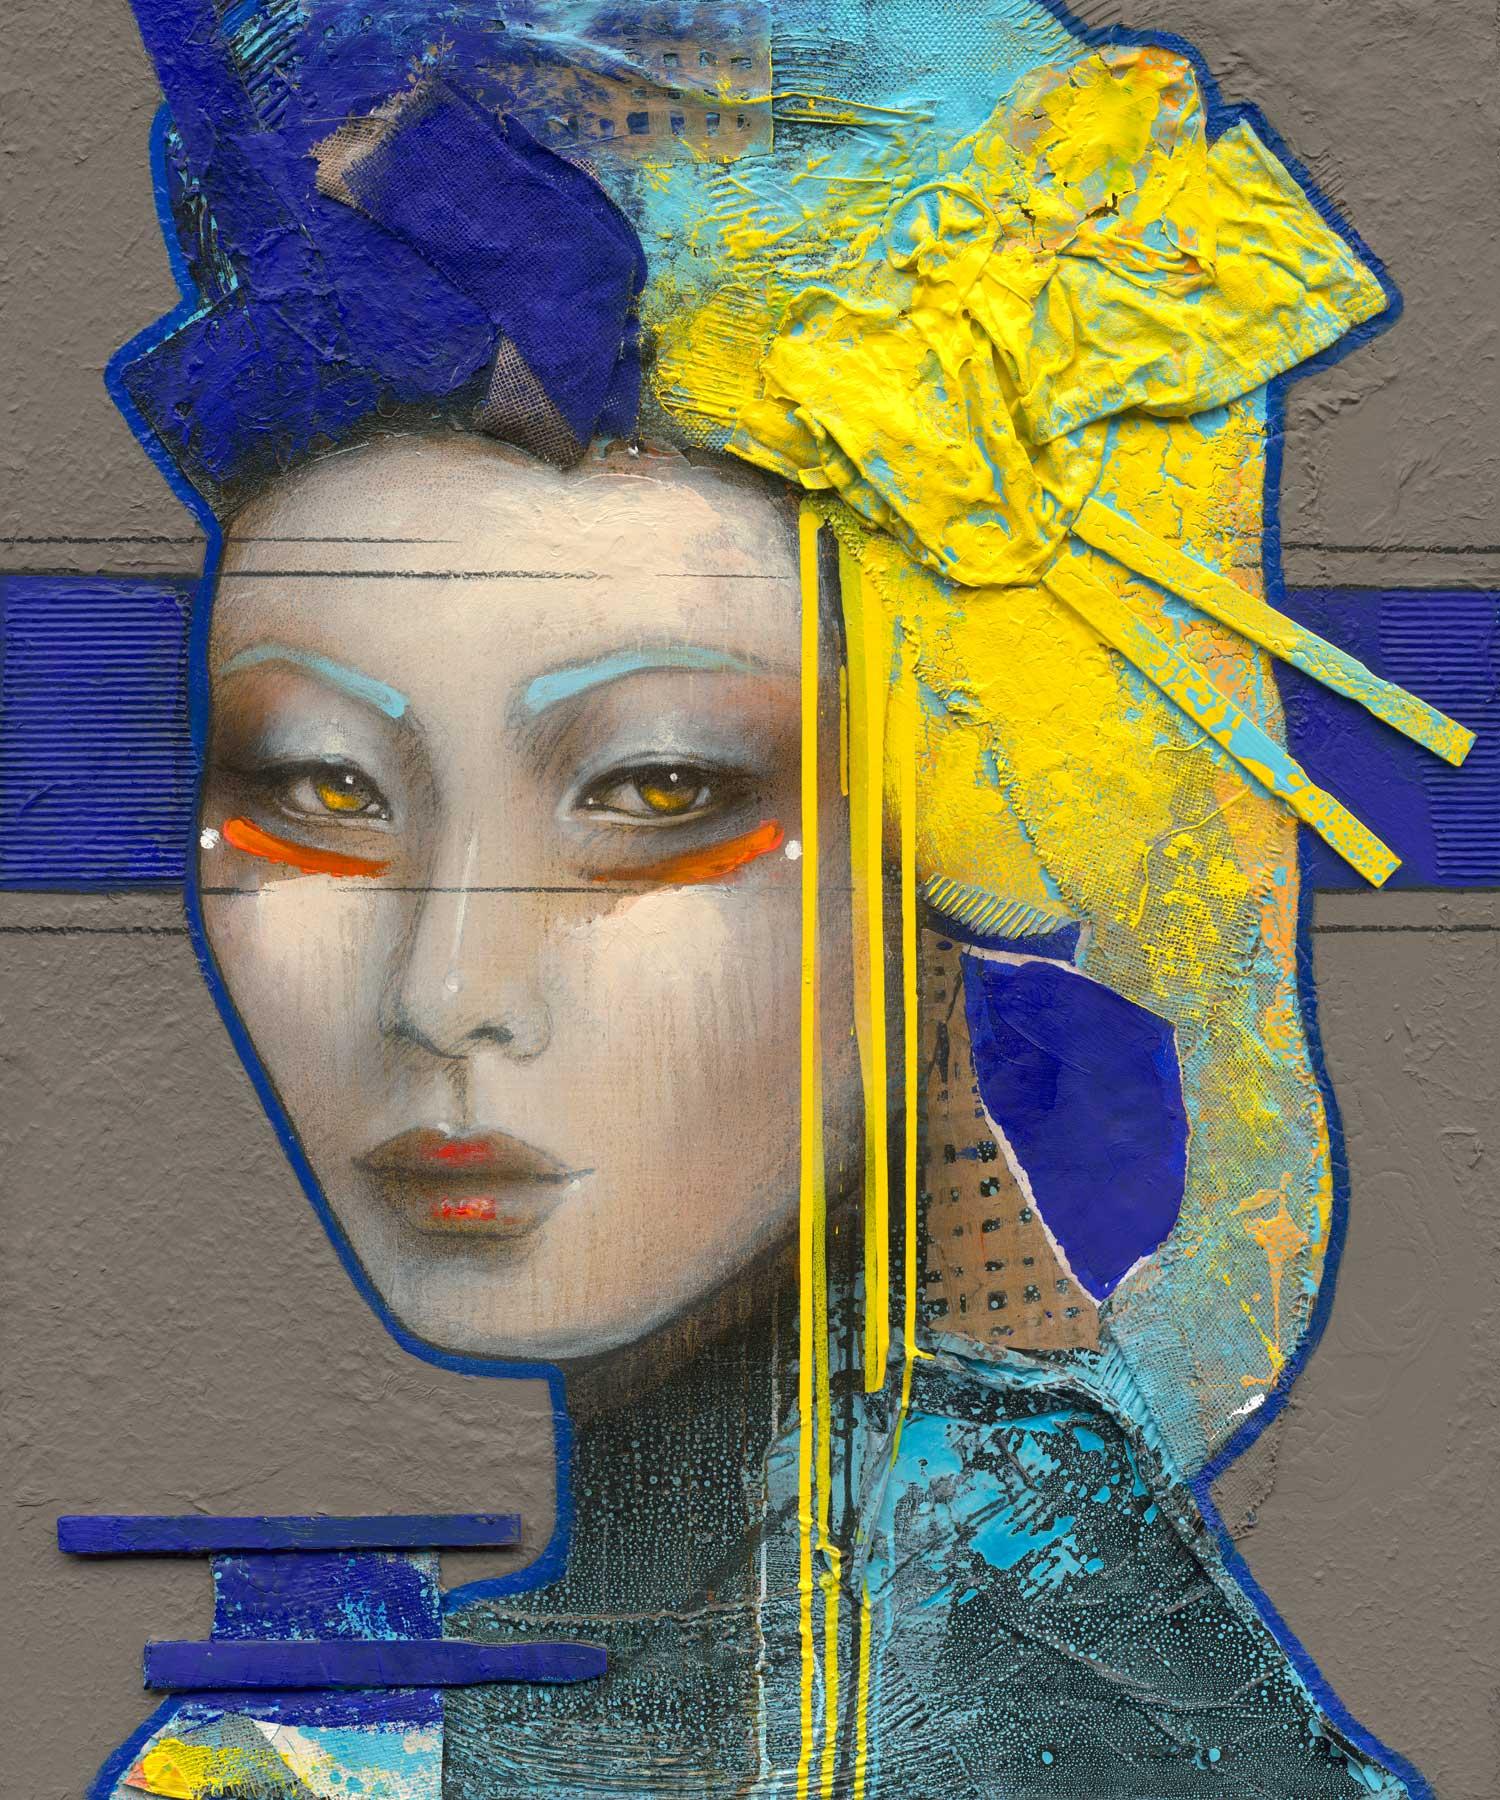 Ger Doornink Figurative Print - Tradition - 21st Century, Contemporary, Japanese Woman Portrait, Pigment Print